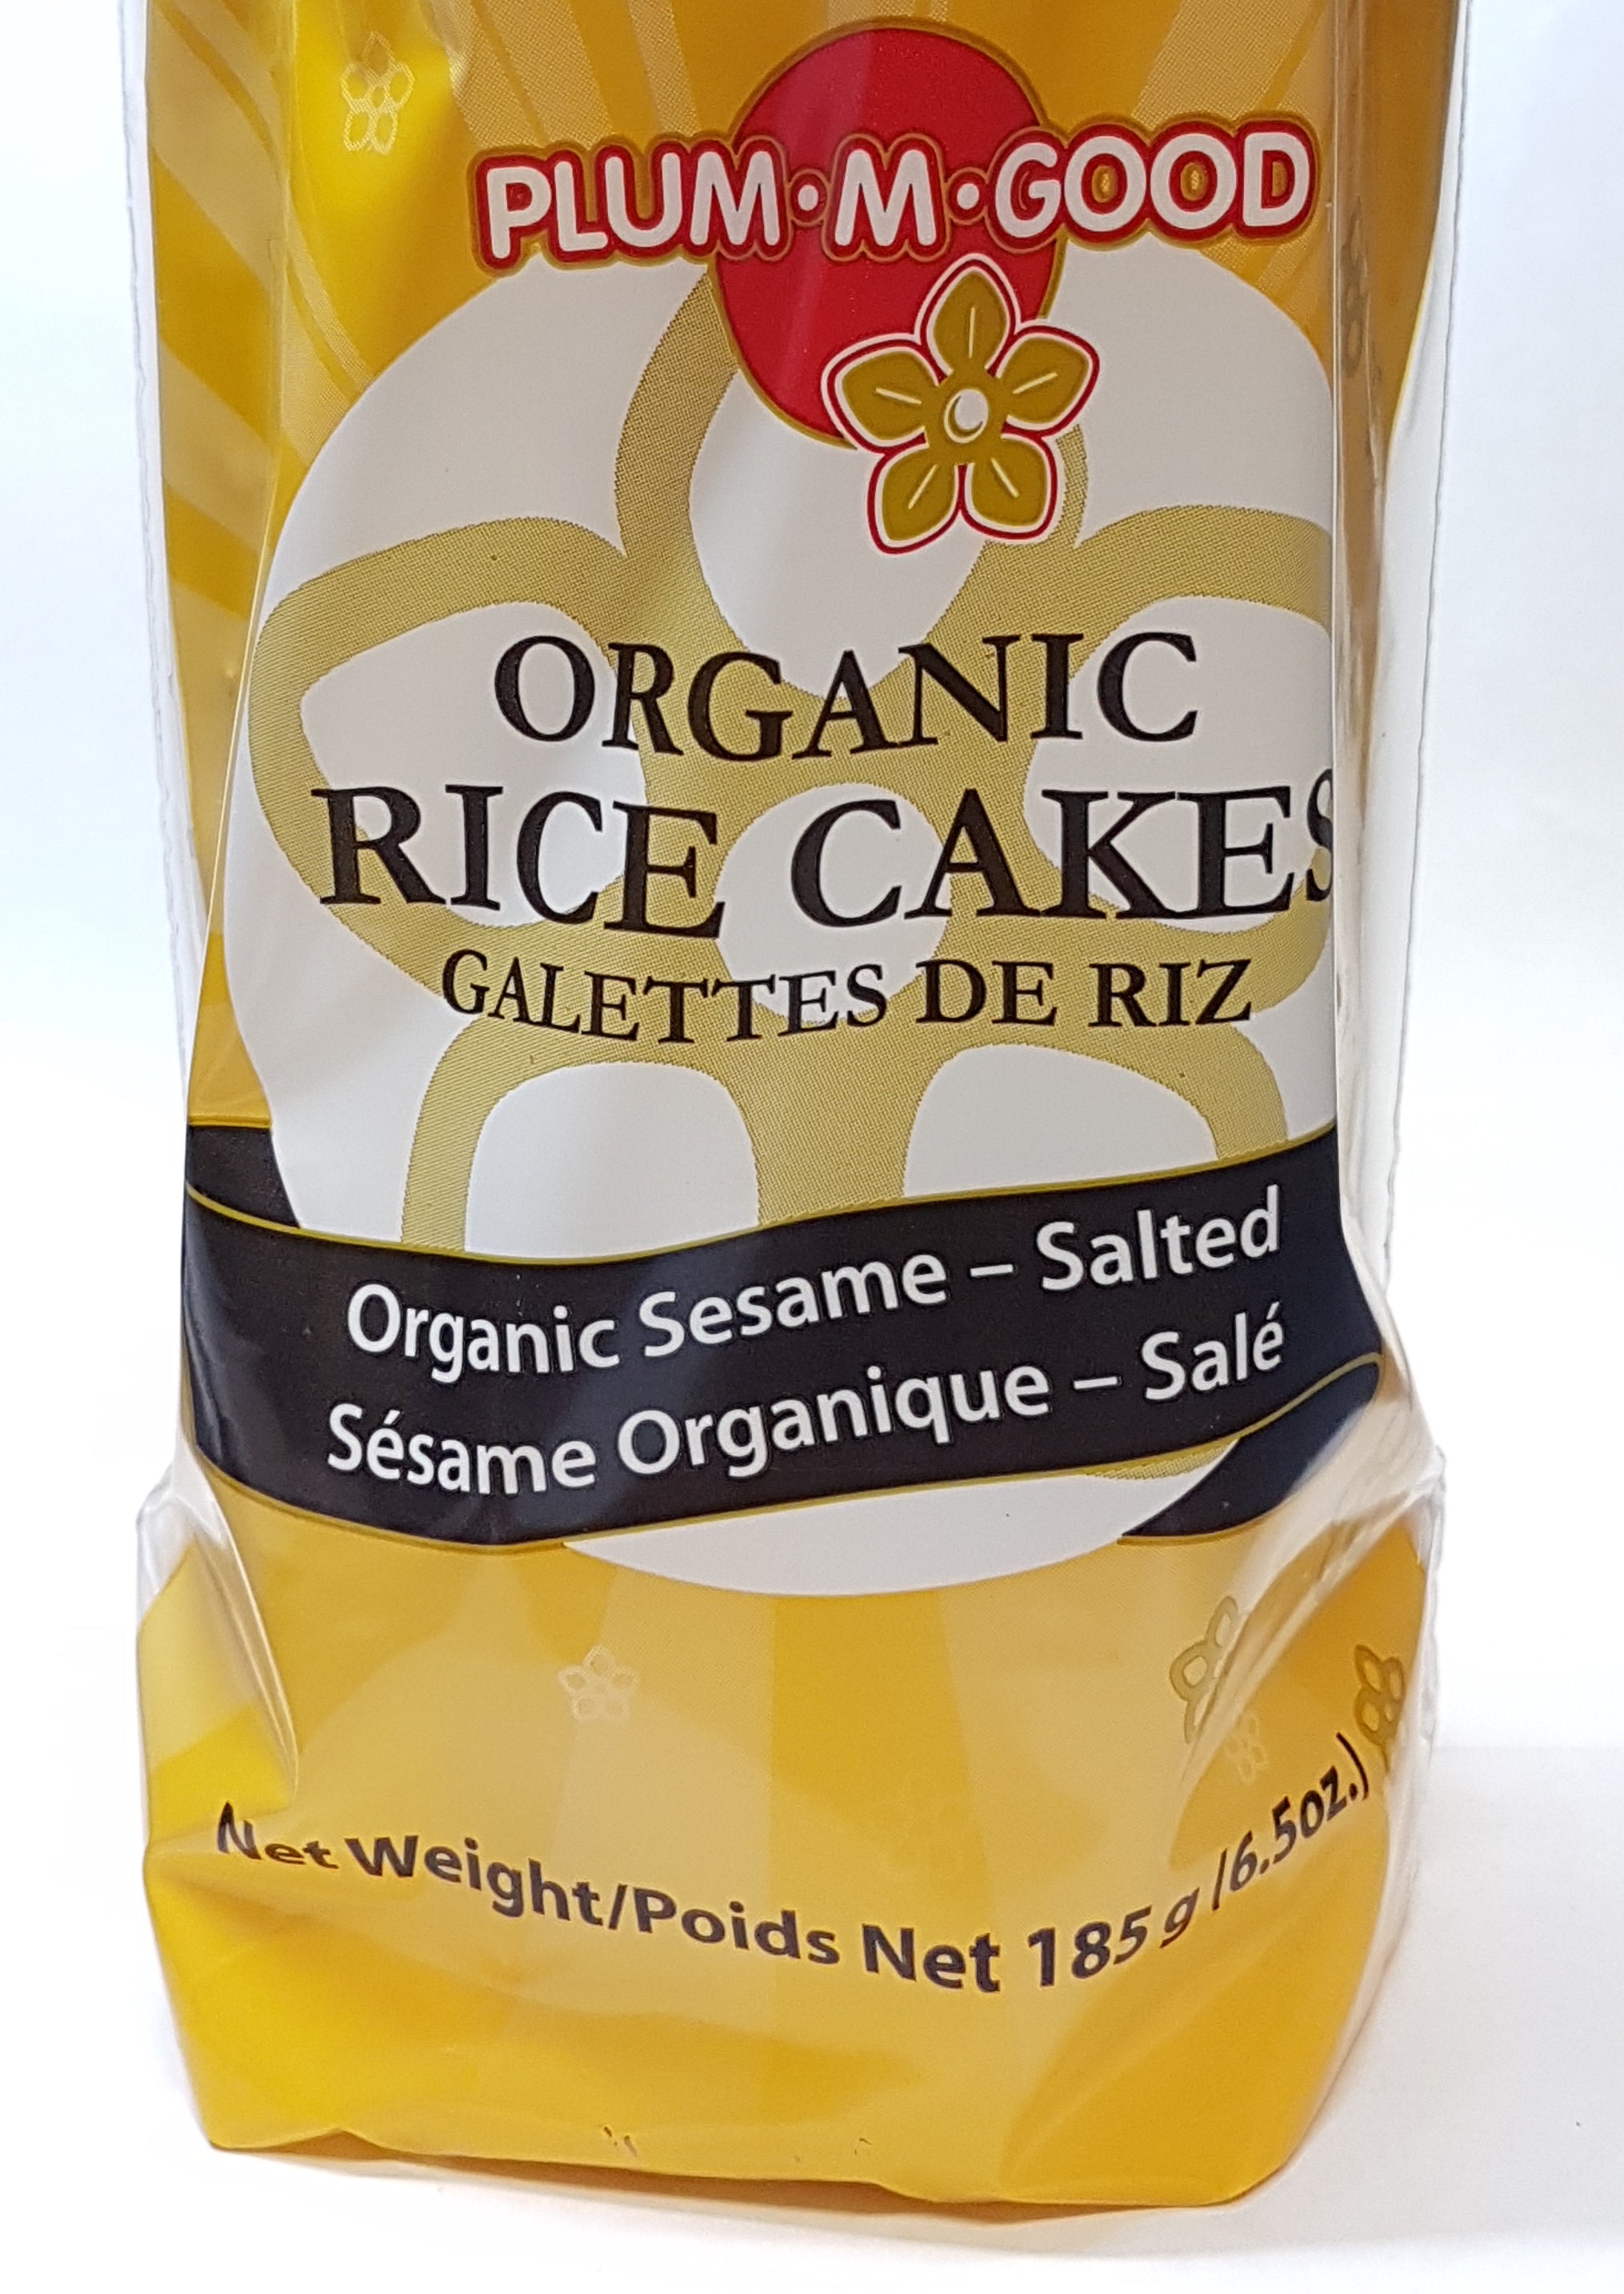 Plum M Good Organic Rice Cake w/ Sesame - Salted (185g) - Lifestyle Markets